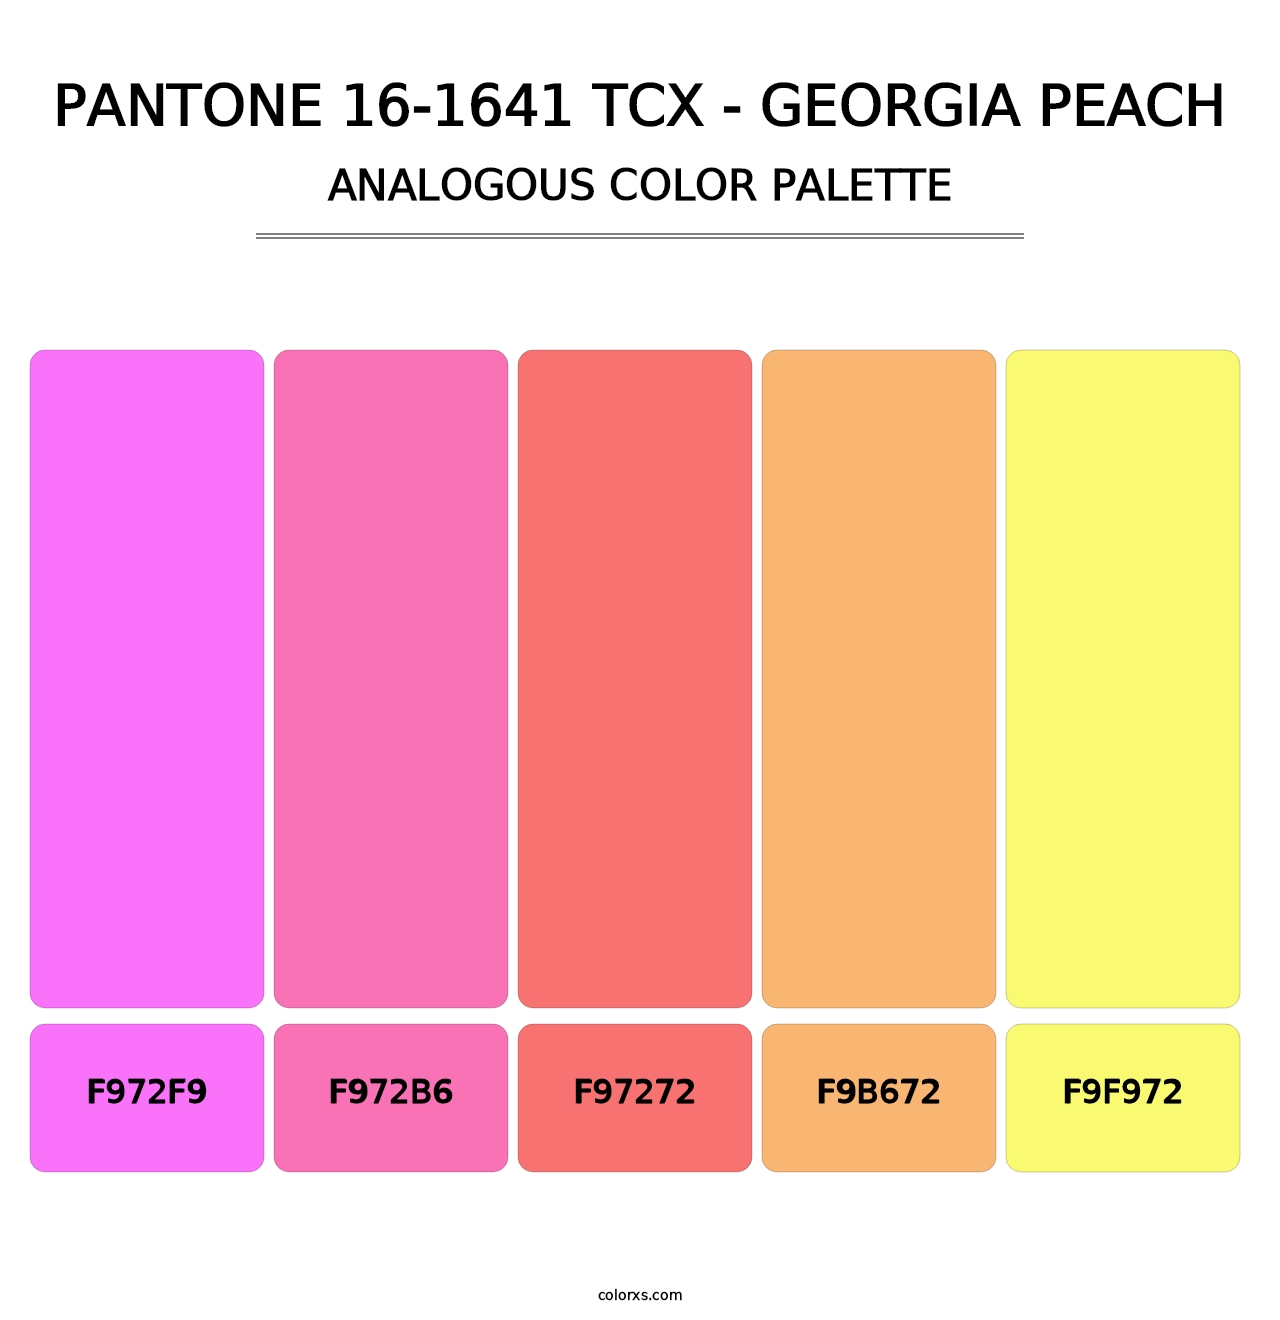 PANTONE 16-1641 TCX - Georgia Peach - Analogous Color Palette